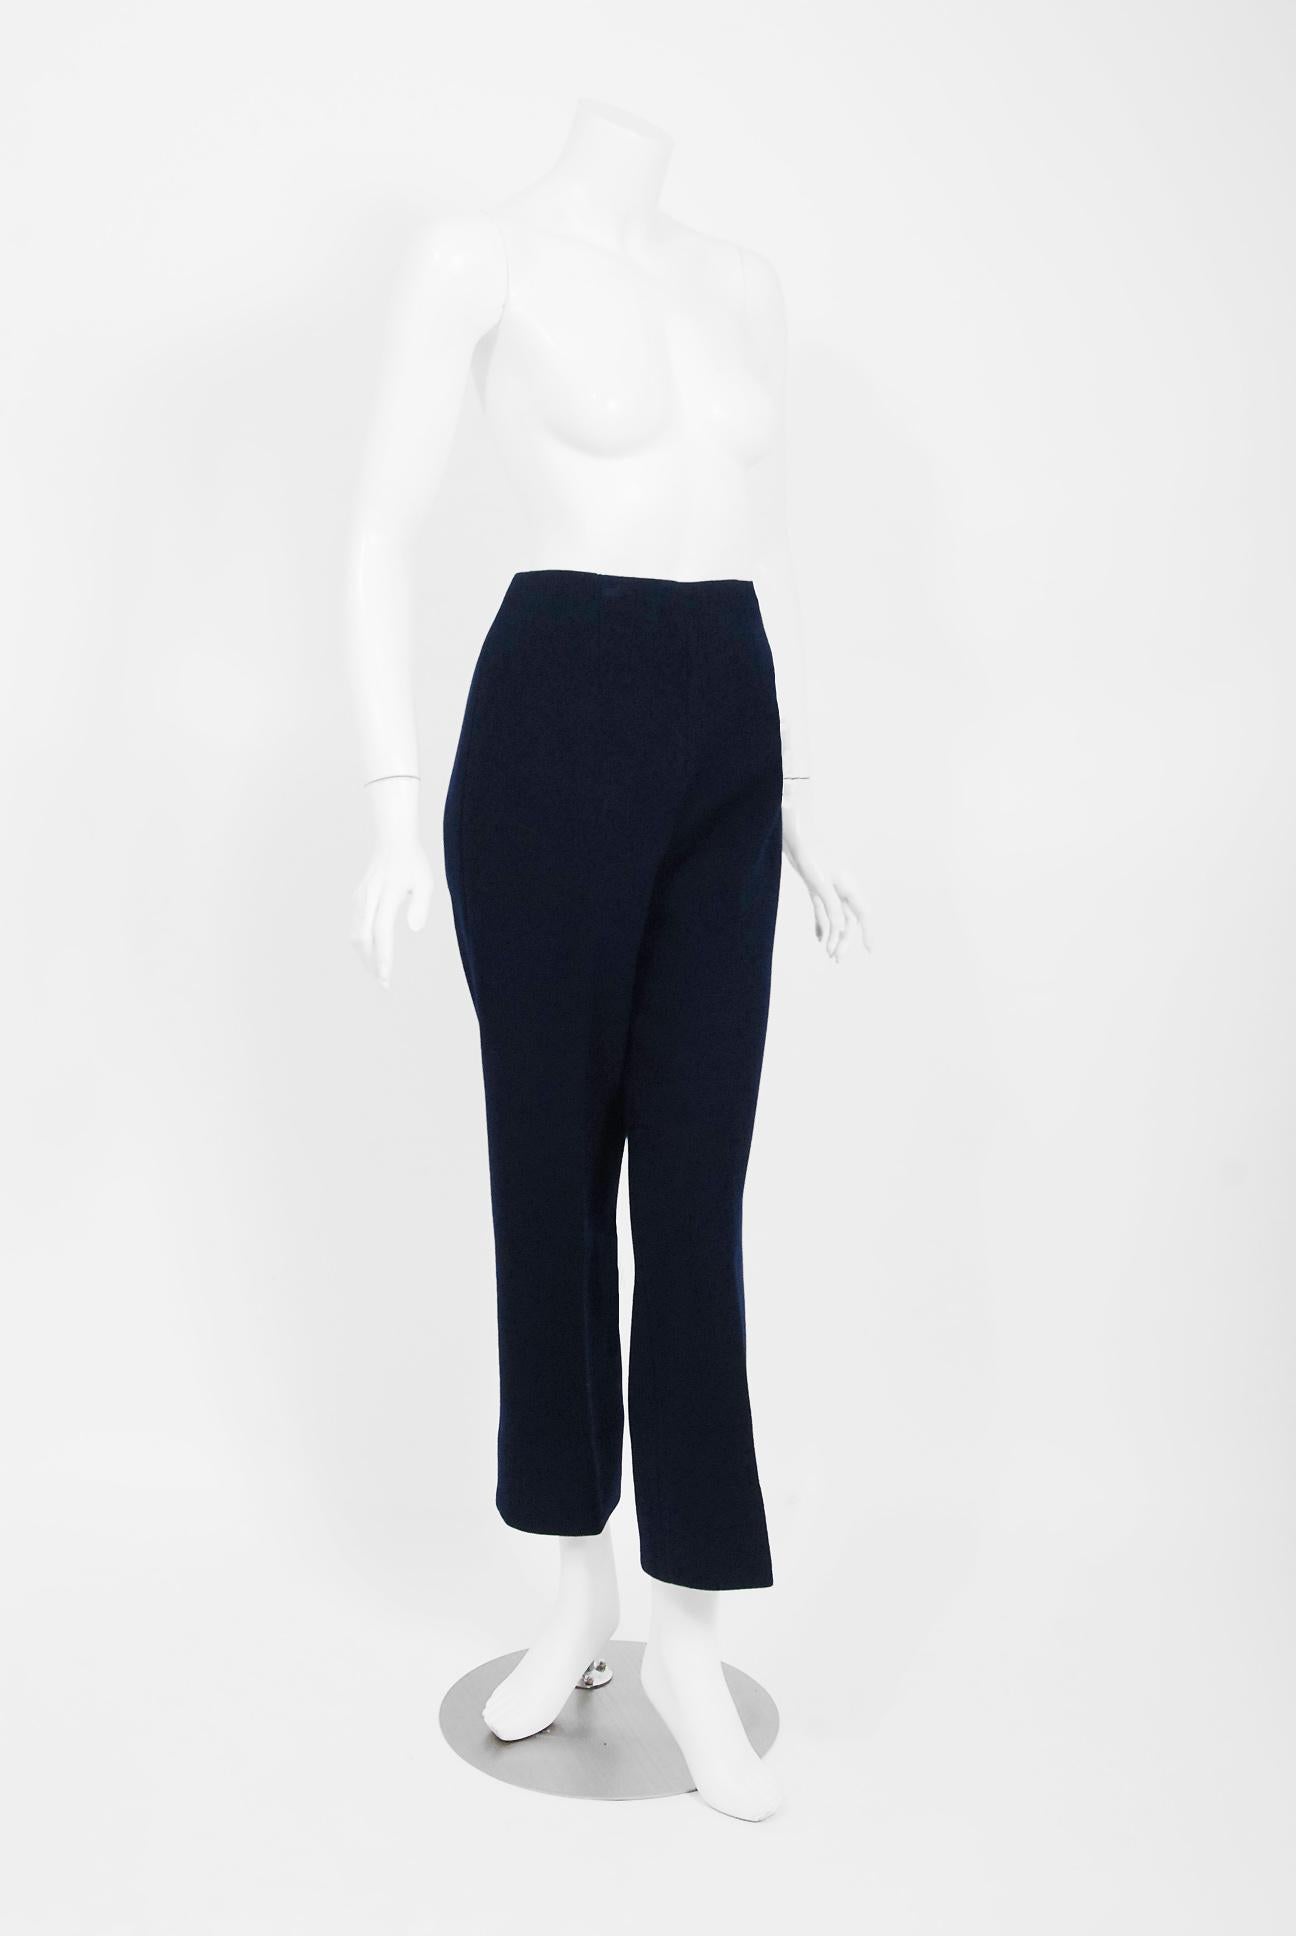 1968 Calvin Klein Navy-Blue Wool Mod Pockets Sleeveless Tunic & Pants Ensemble  1